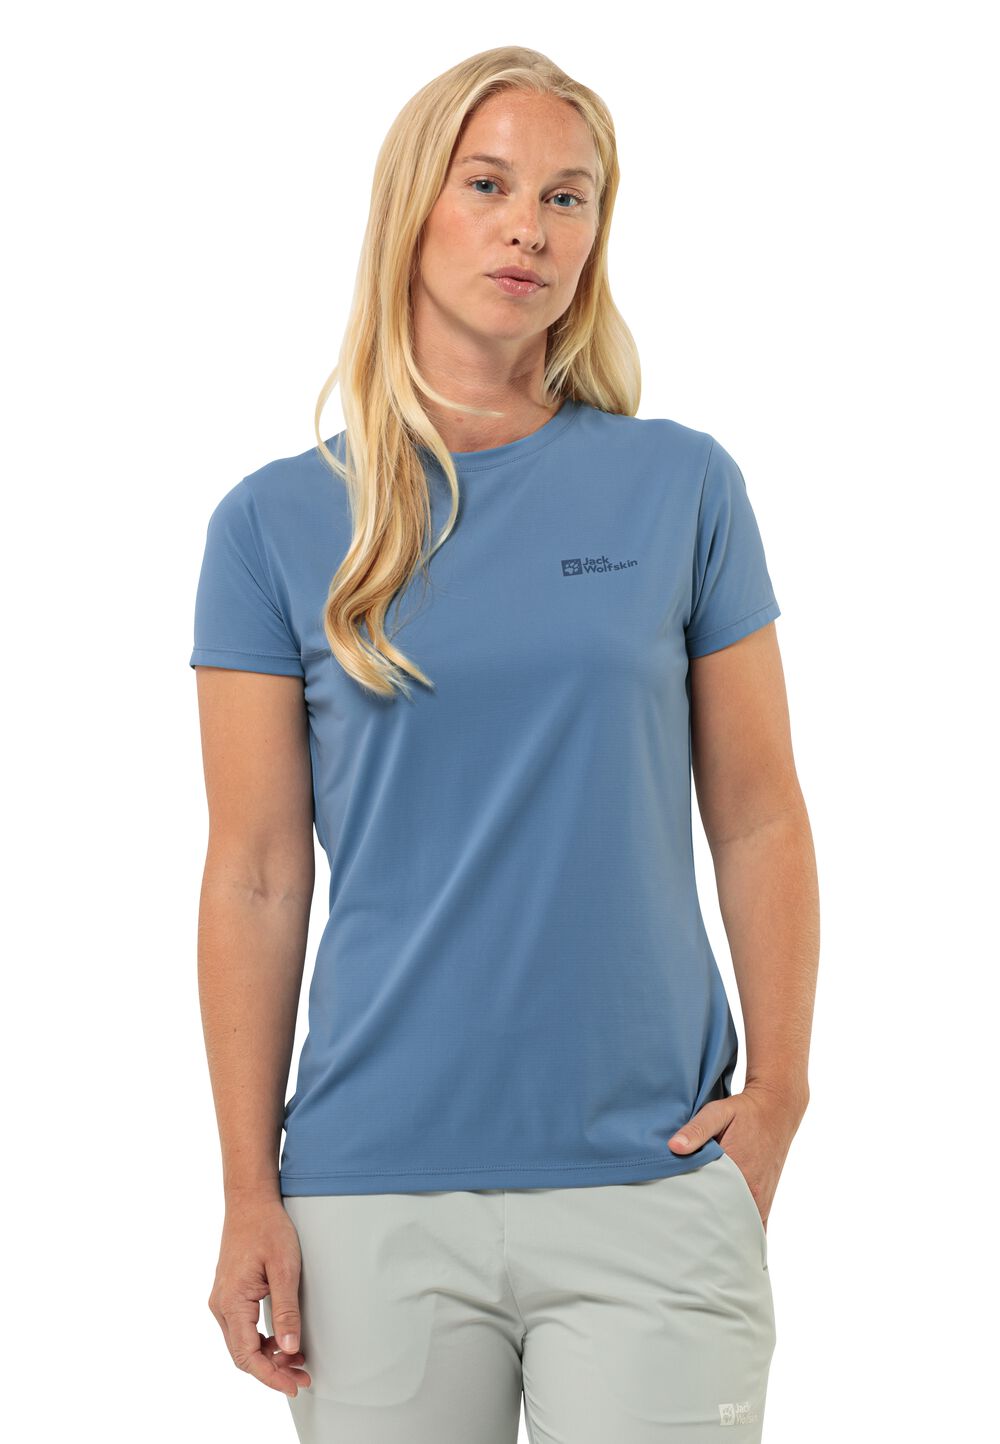 Jack Wolfskin Prelight Trail T-Shirt Women Functioneel shirt Dames XL elemental blue elemental blue